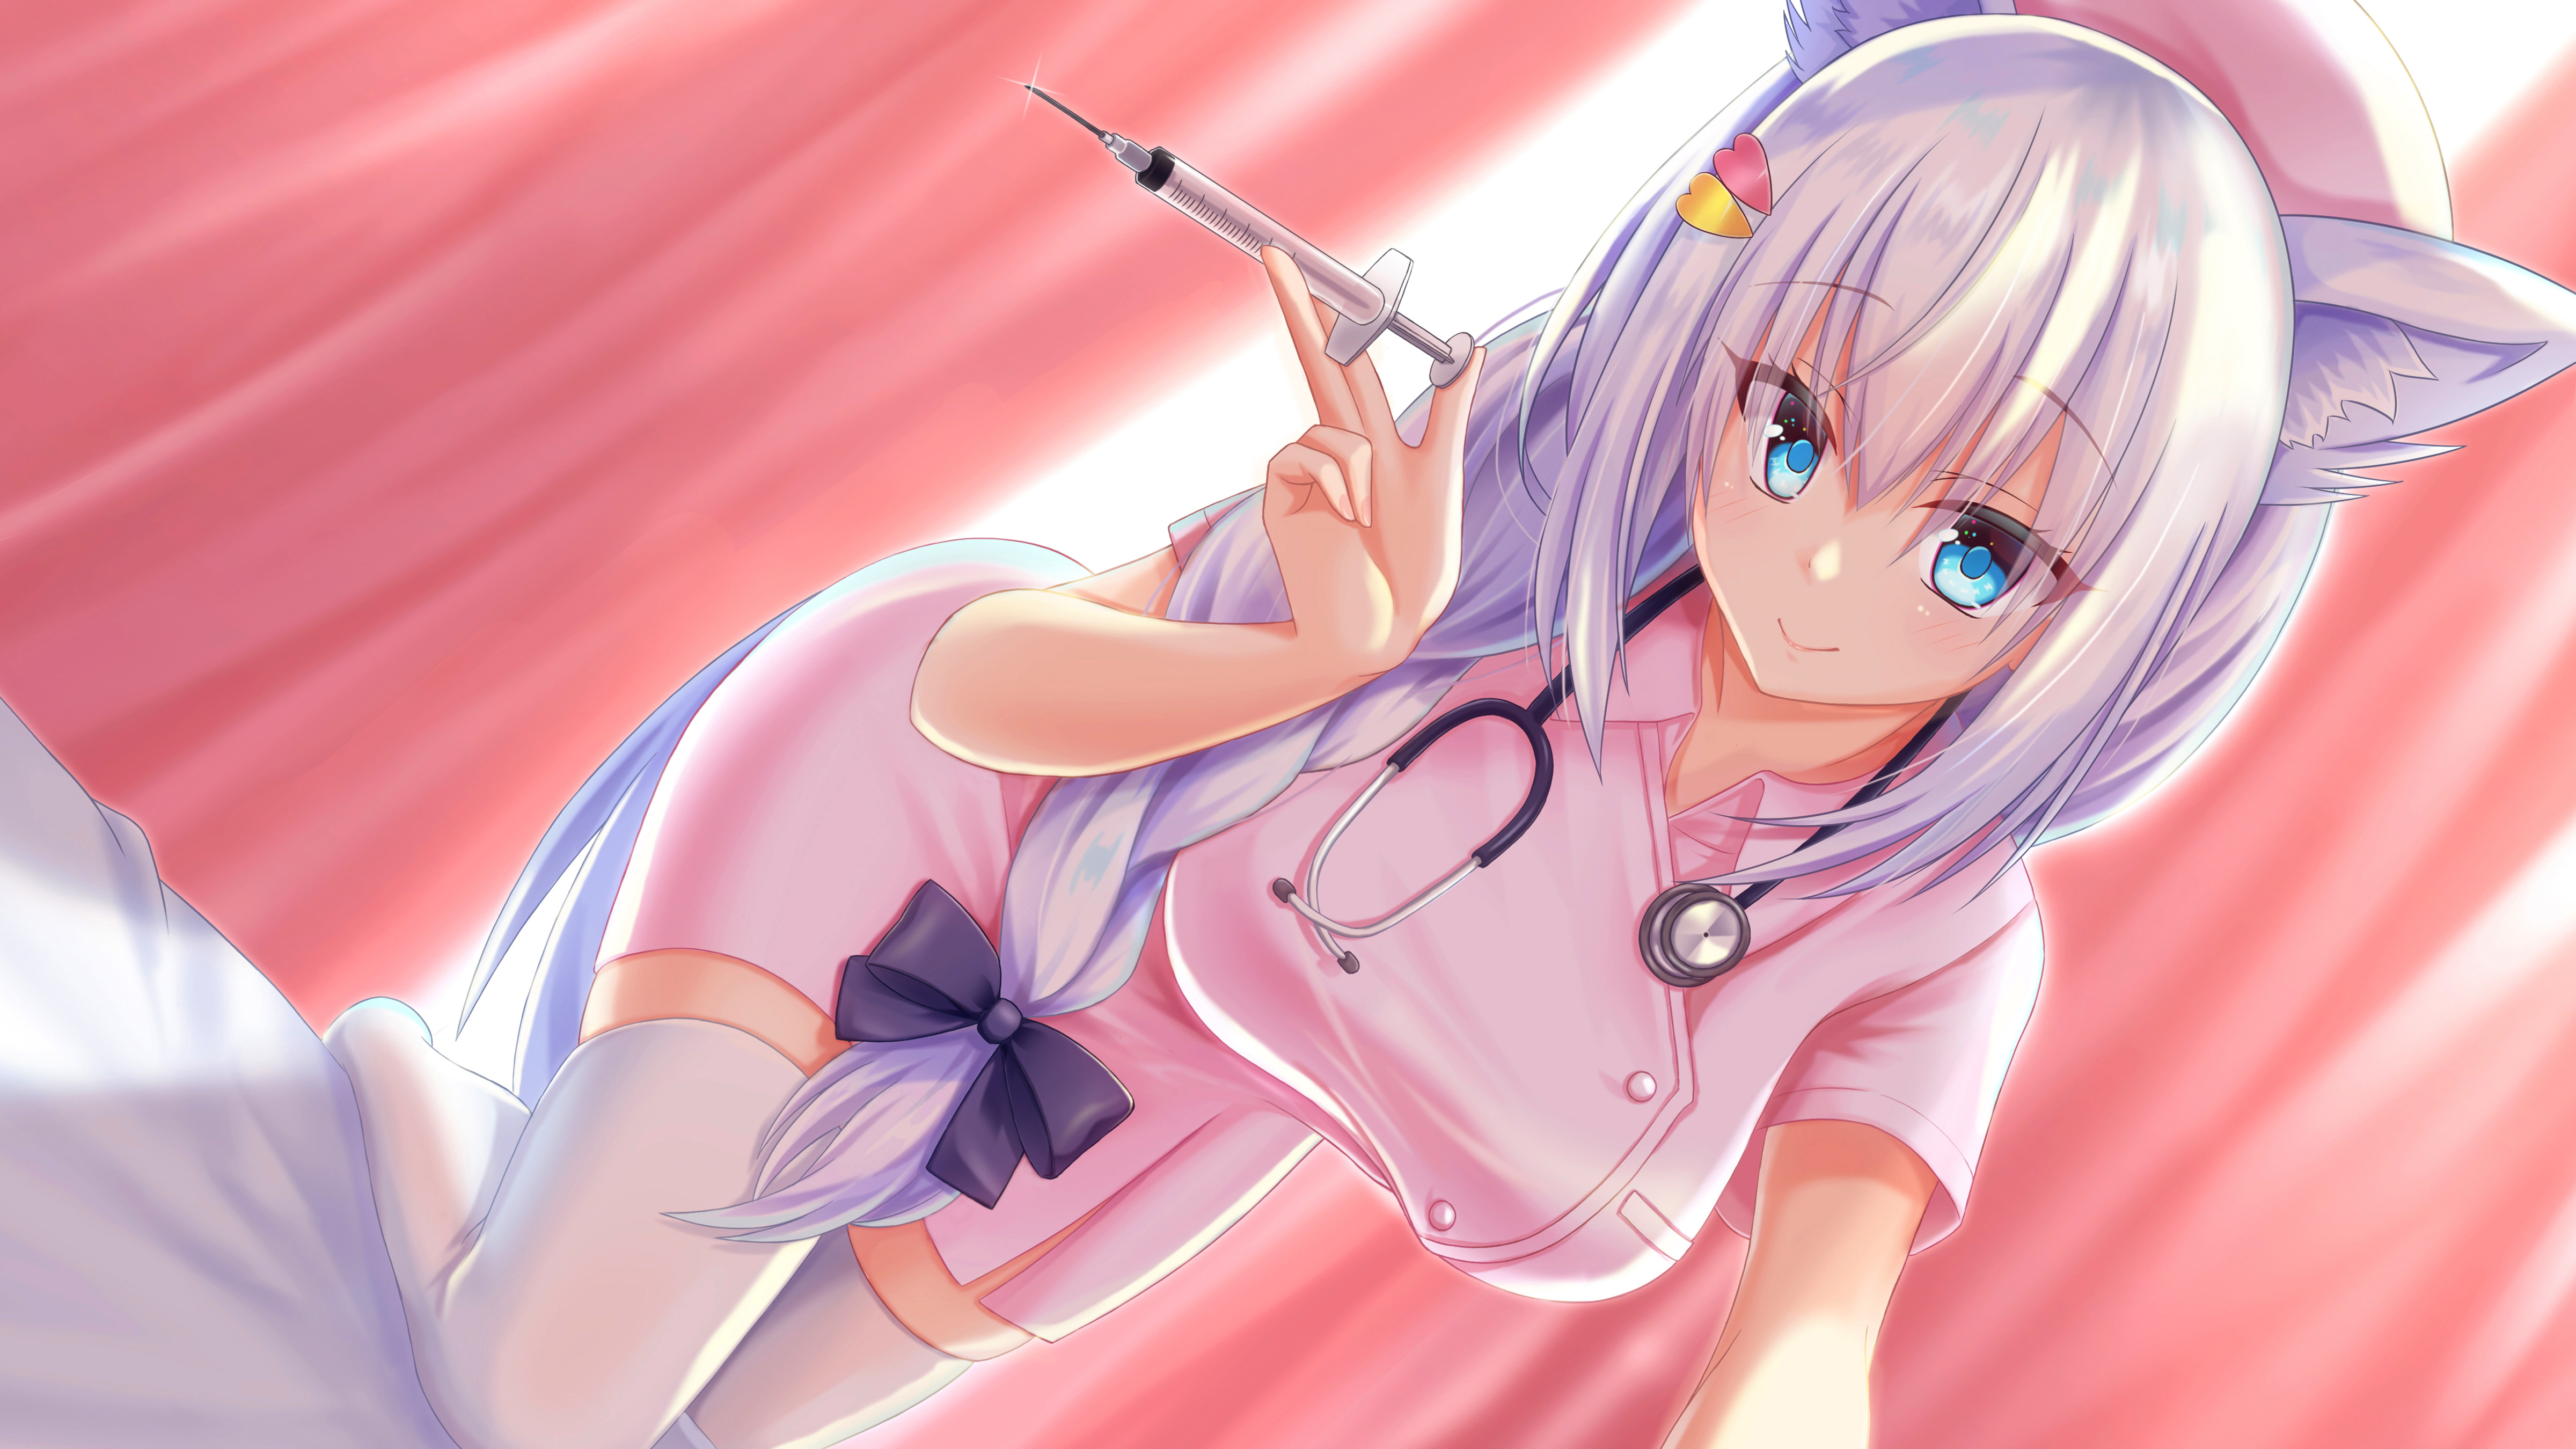 Anime Anime Girls Nurses Nurse Outfit Thigh Highs Syringe Silver Hair Blue Eyes Smiling Animal Ears 4800x2700